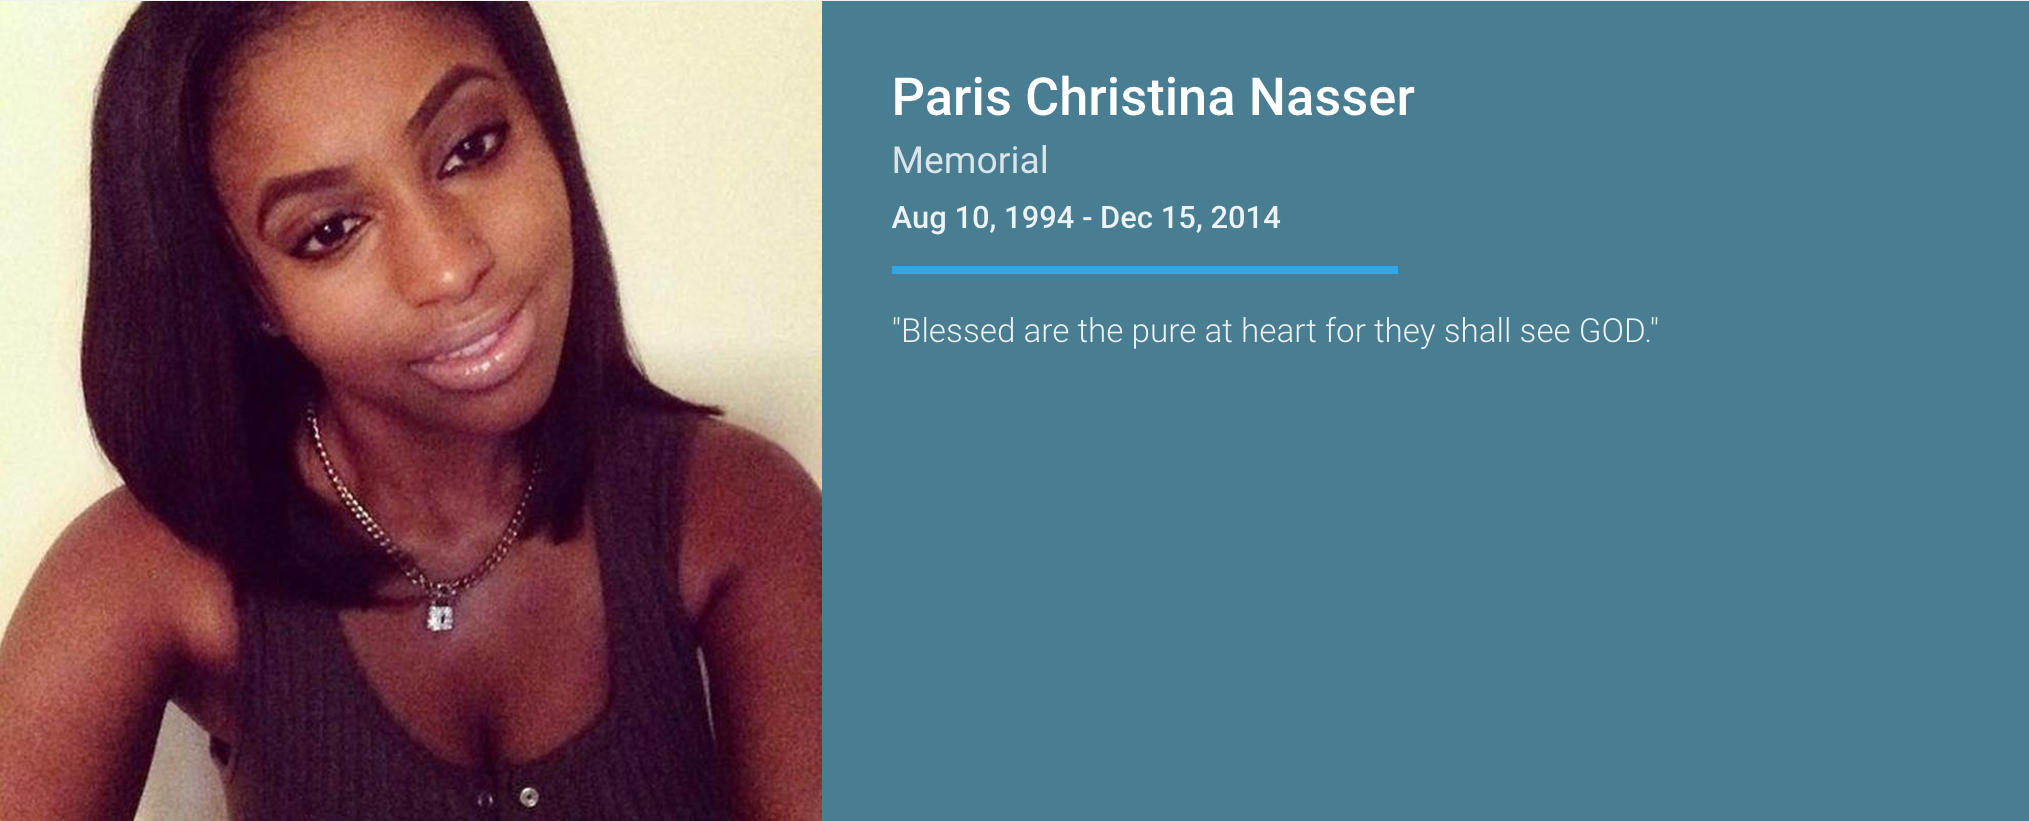 Paris Christina Nasser